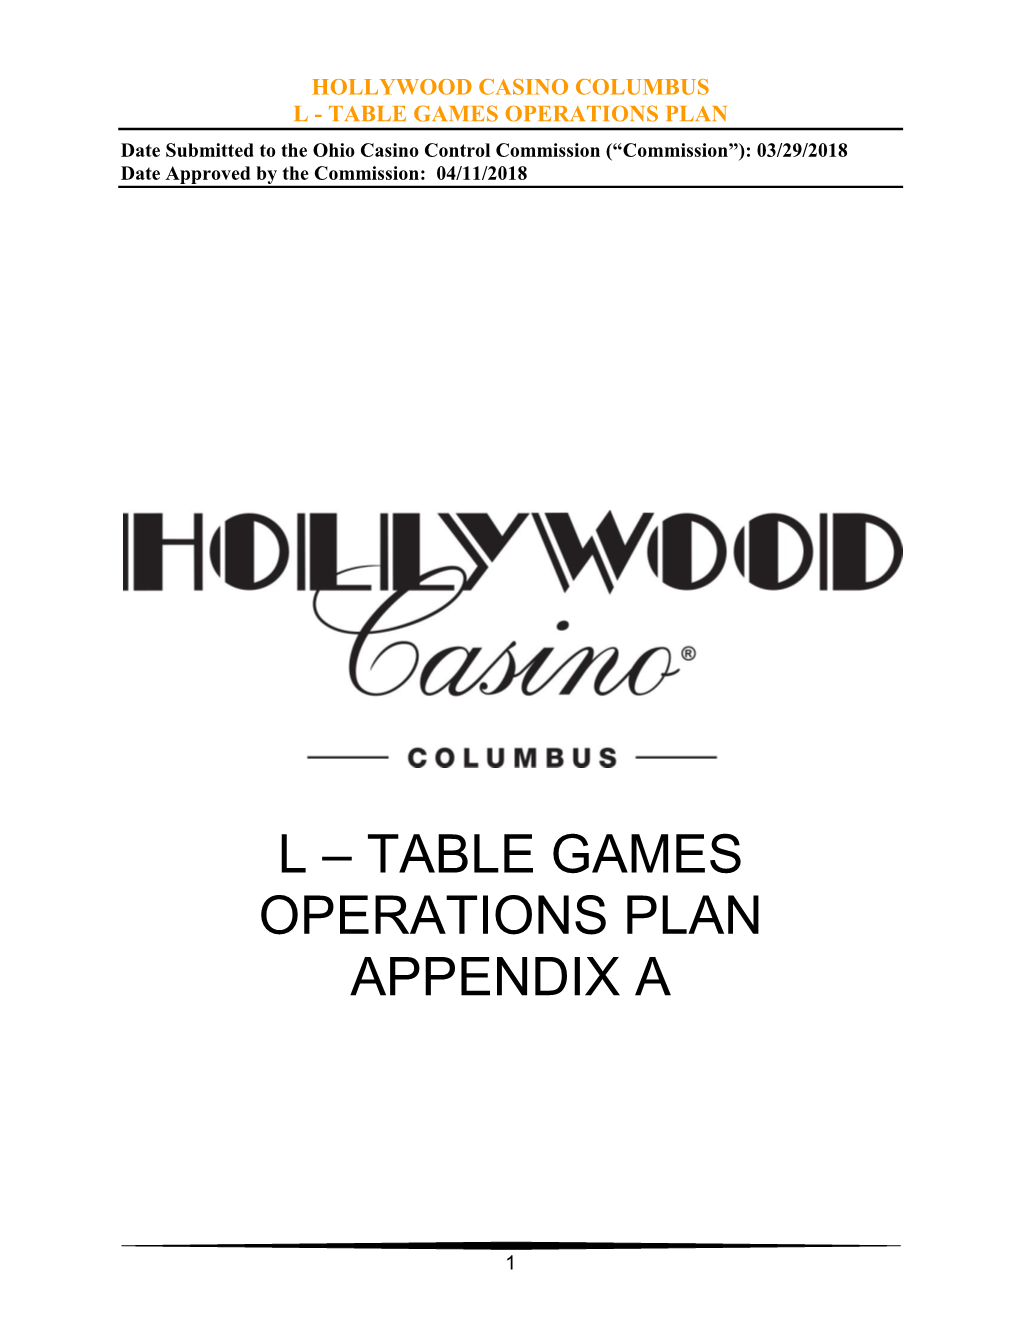 Table Games Operations Plan Appendix A